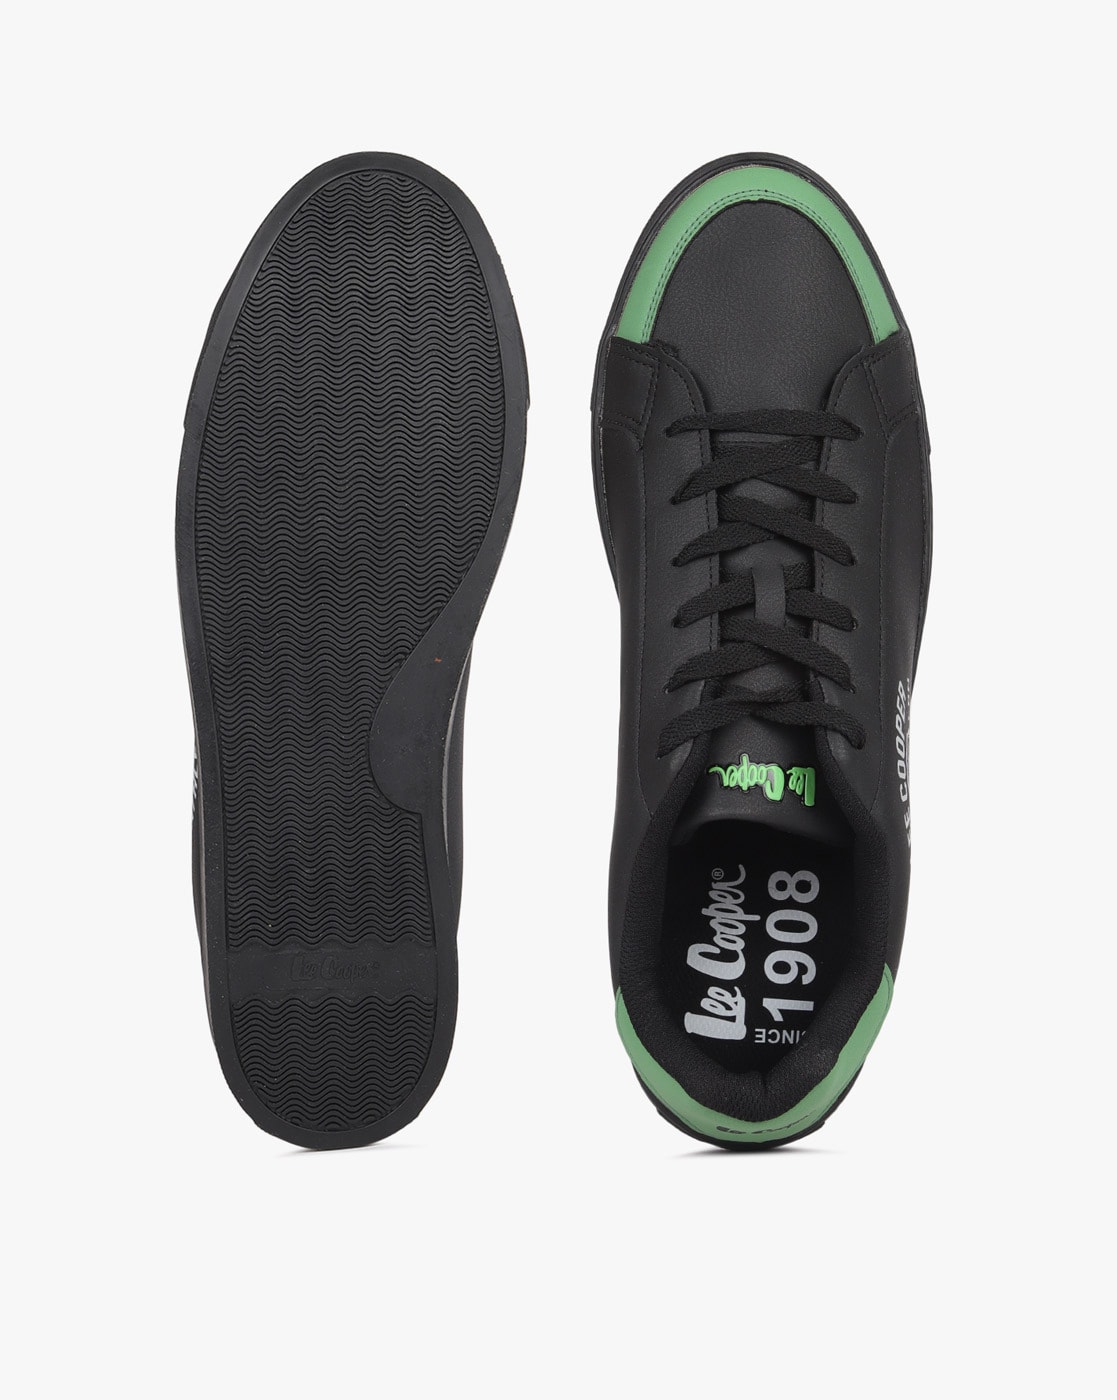 Buy Lee Cooper Men's Black Sneakers - 7 UK (41 EU) (8 US) (LC2024B1) at  Amazon.in